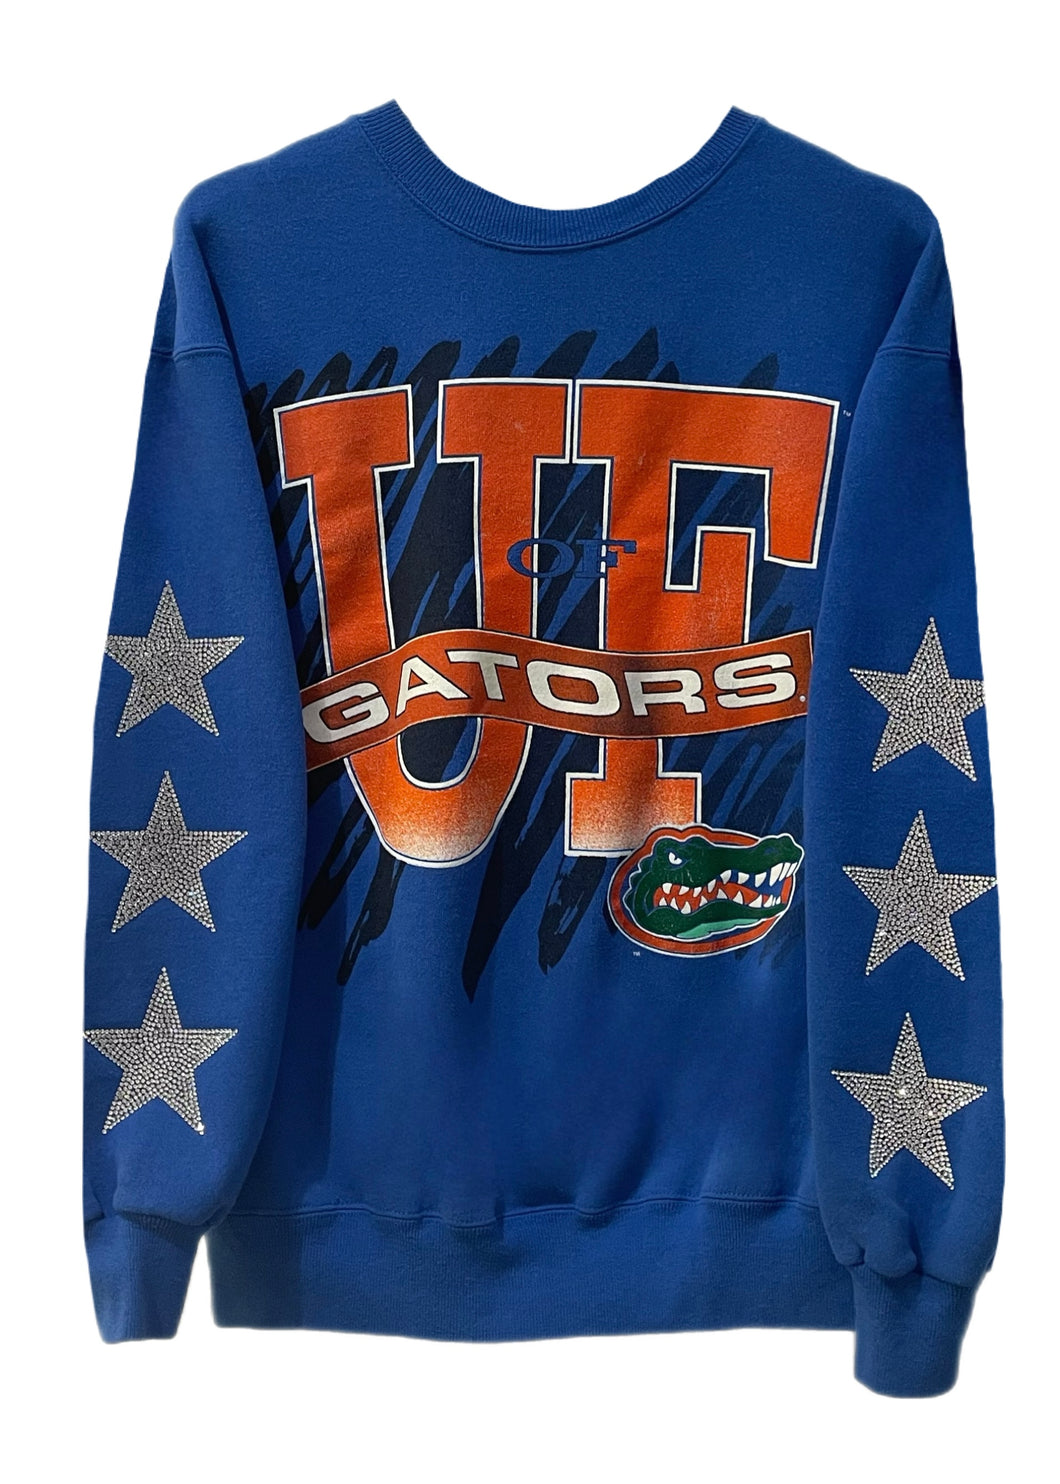 University of Florida, One of a KIND Vintage UF Gator Sweatshirt with Three Crystal Star Design